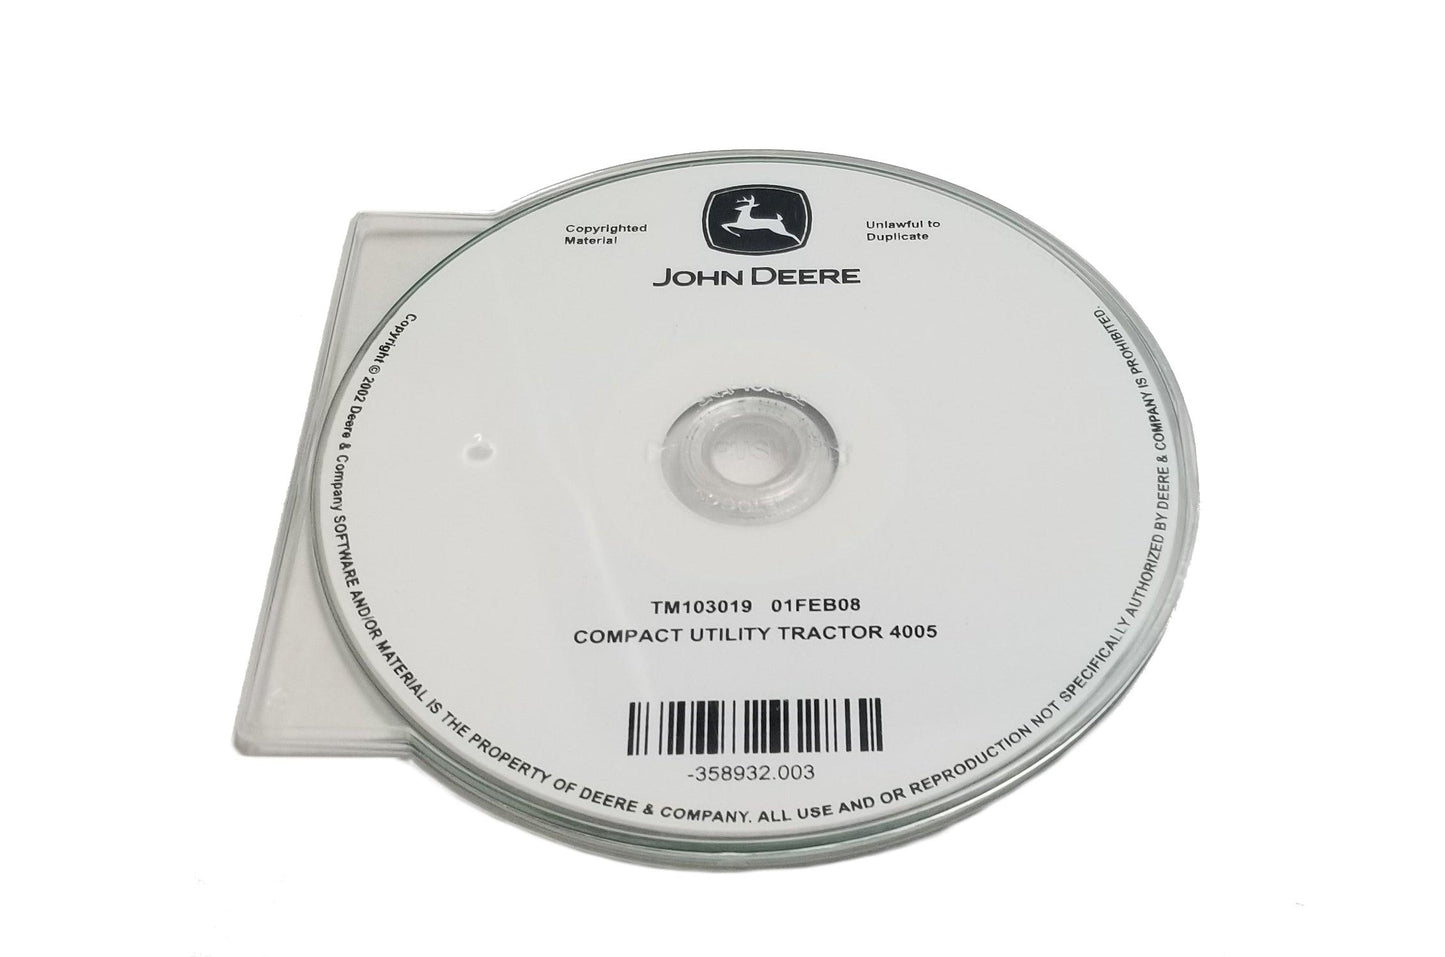 John Deere 4005 (100004-) Compact Utility Tractor Technical CD Manual - TM103019CD